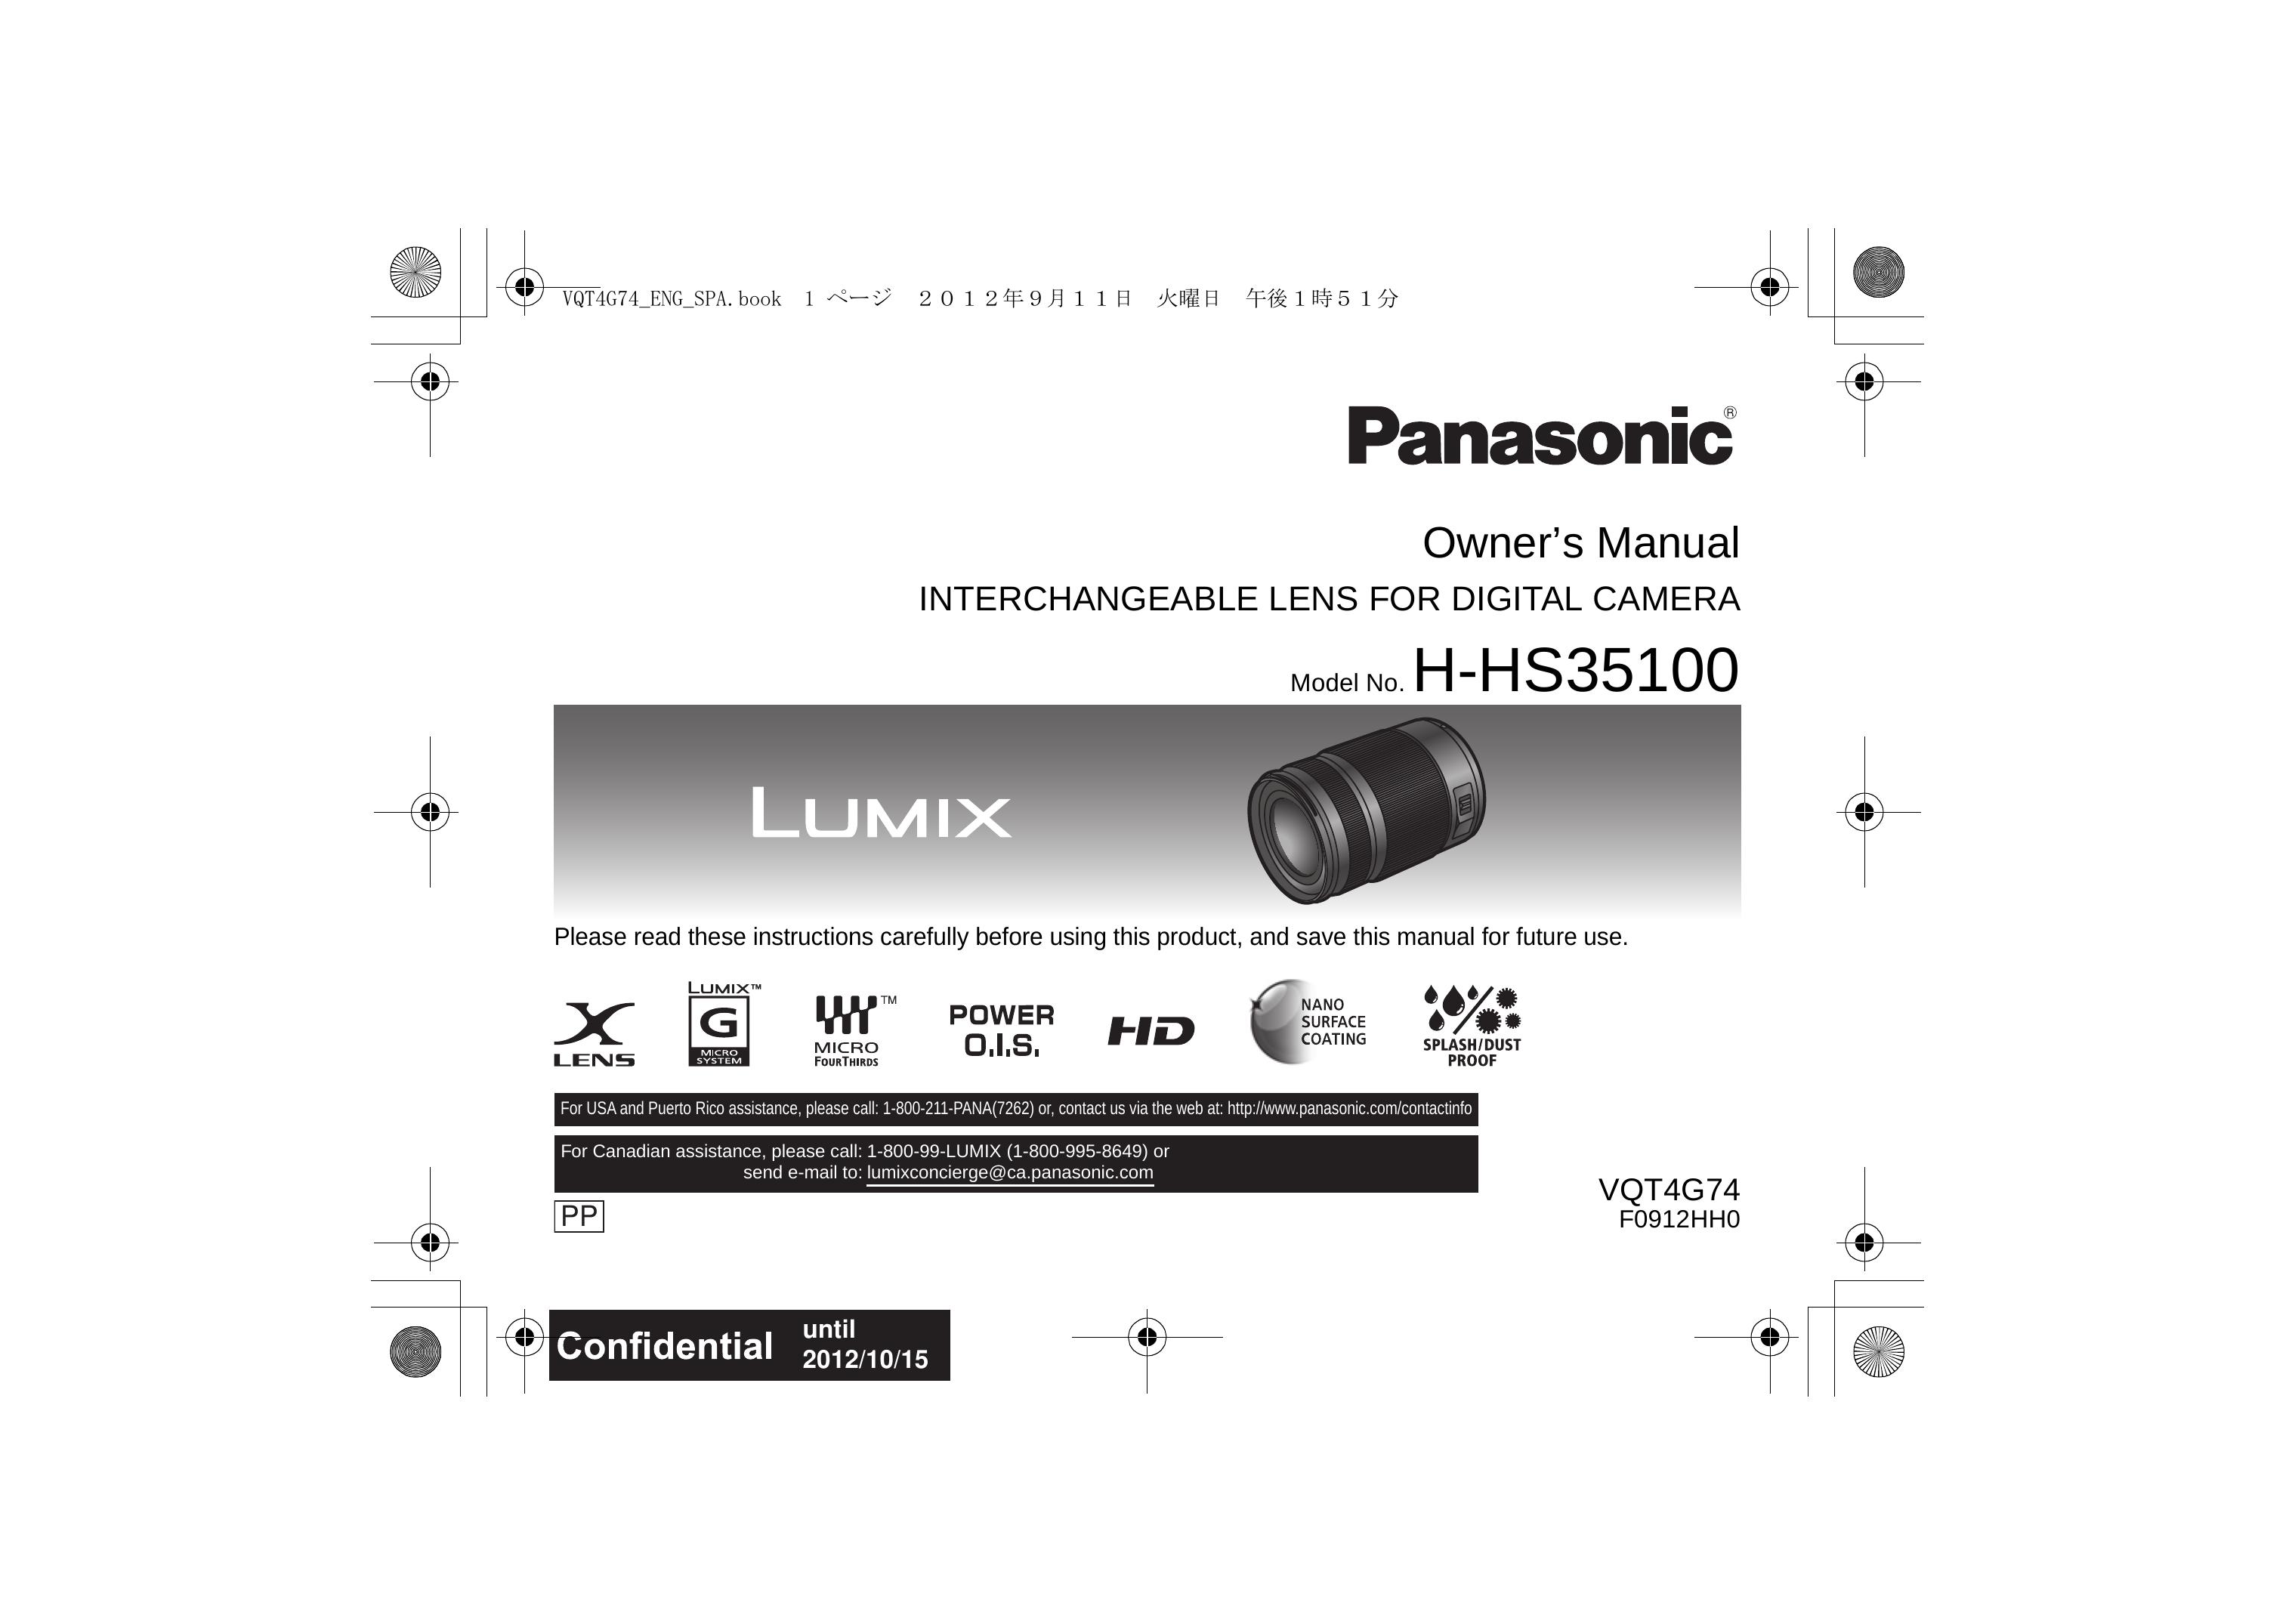 Panasonic H-HS35100 Camera Lens User Manual